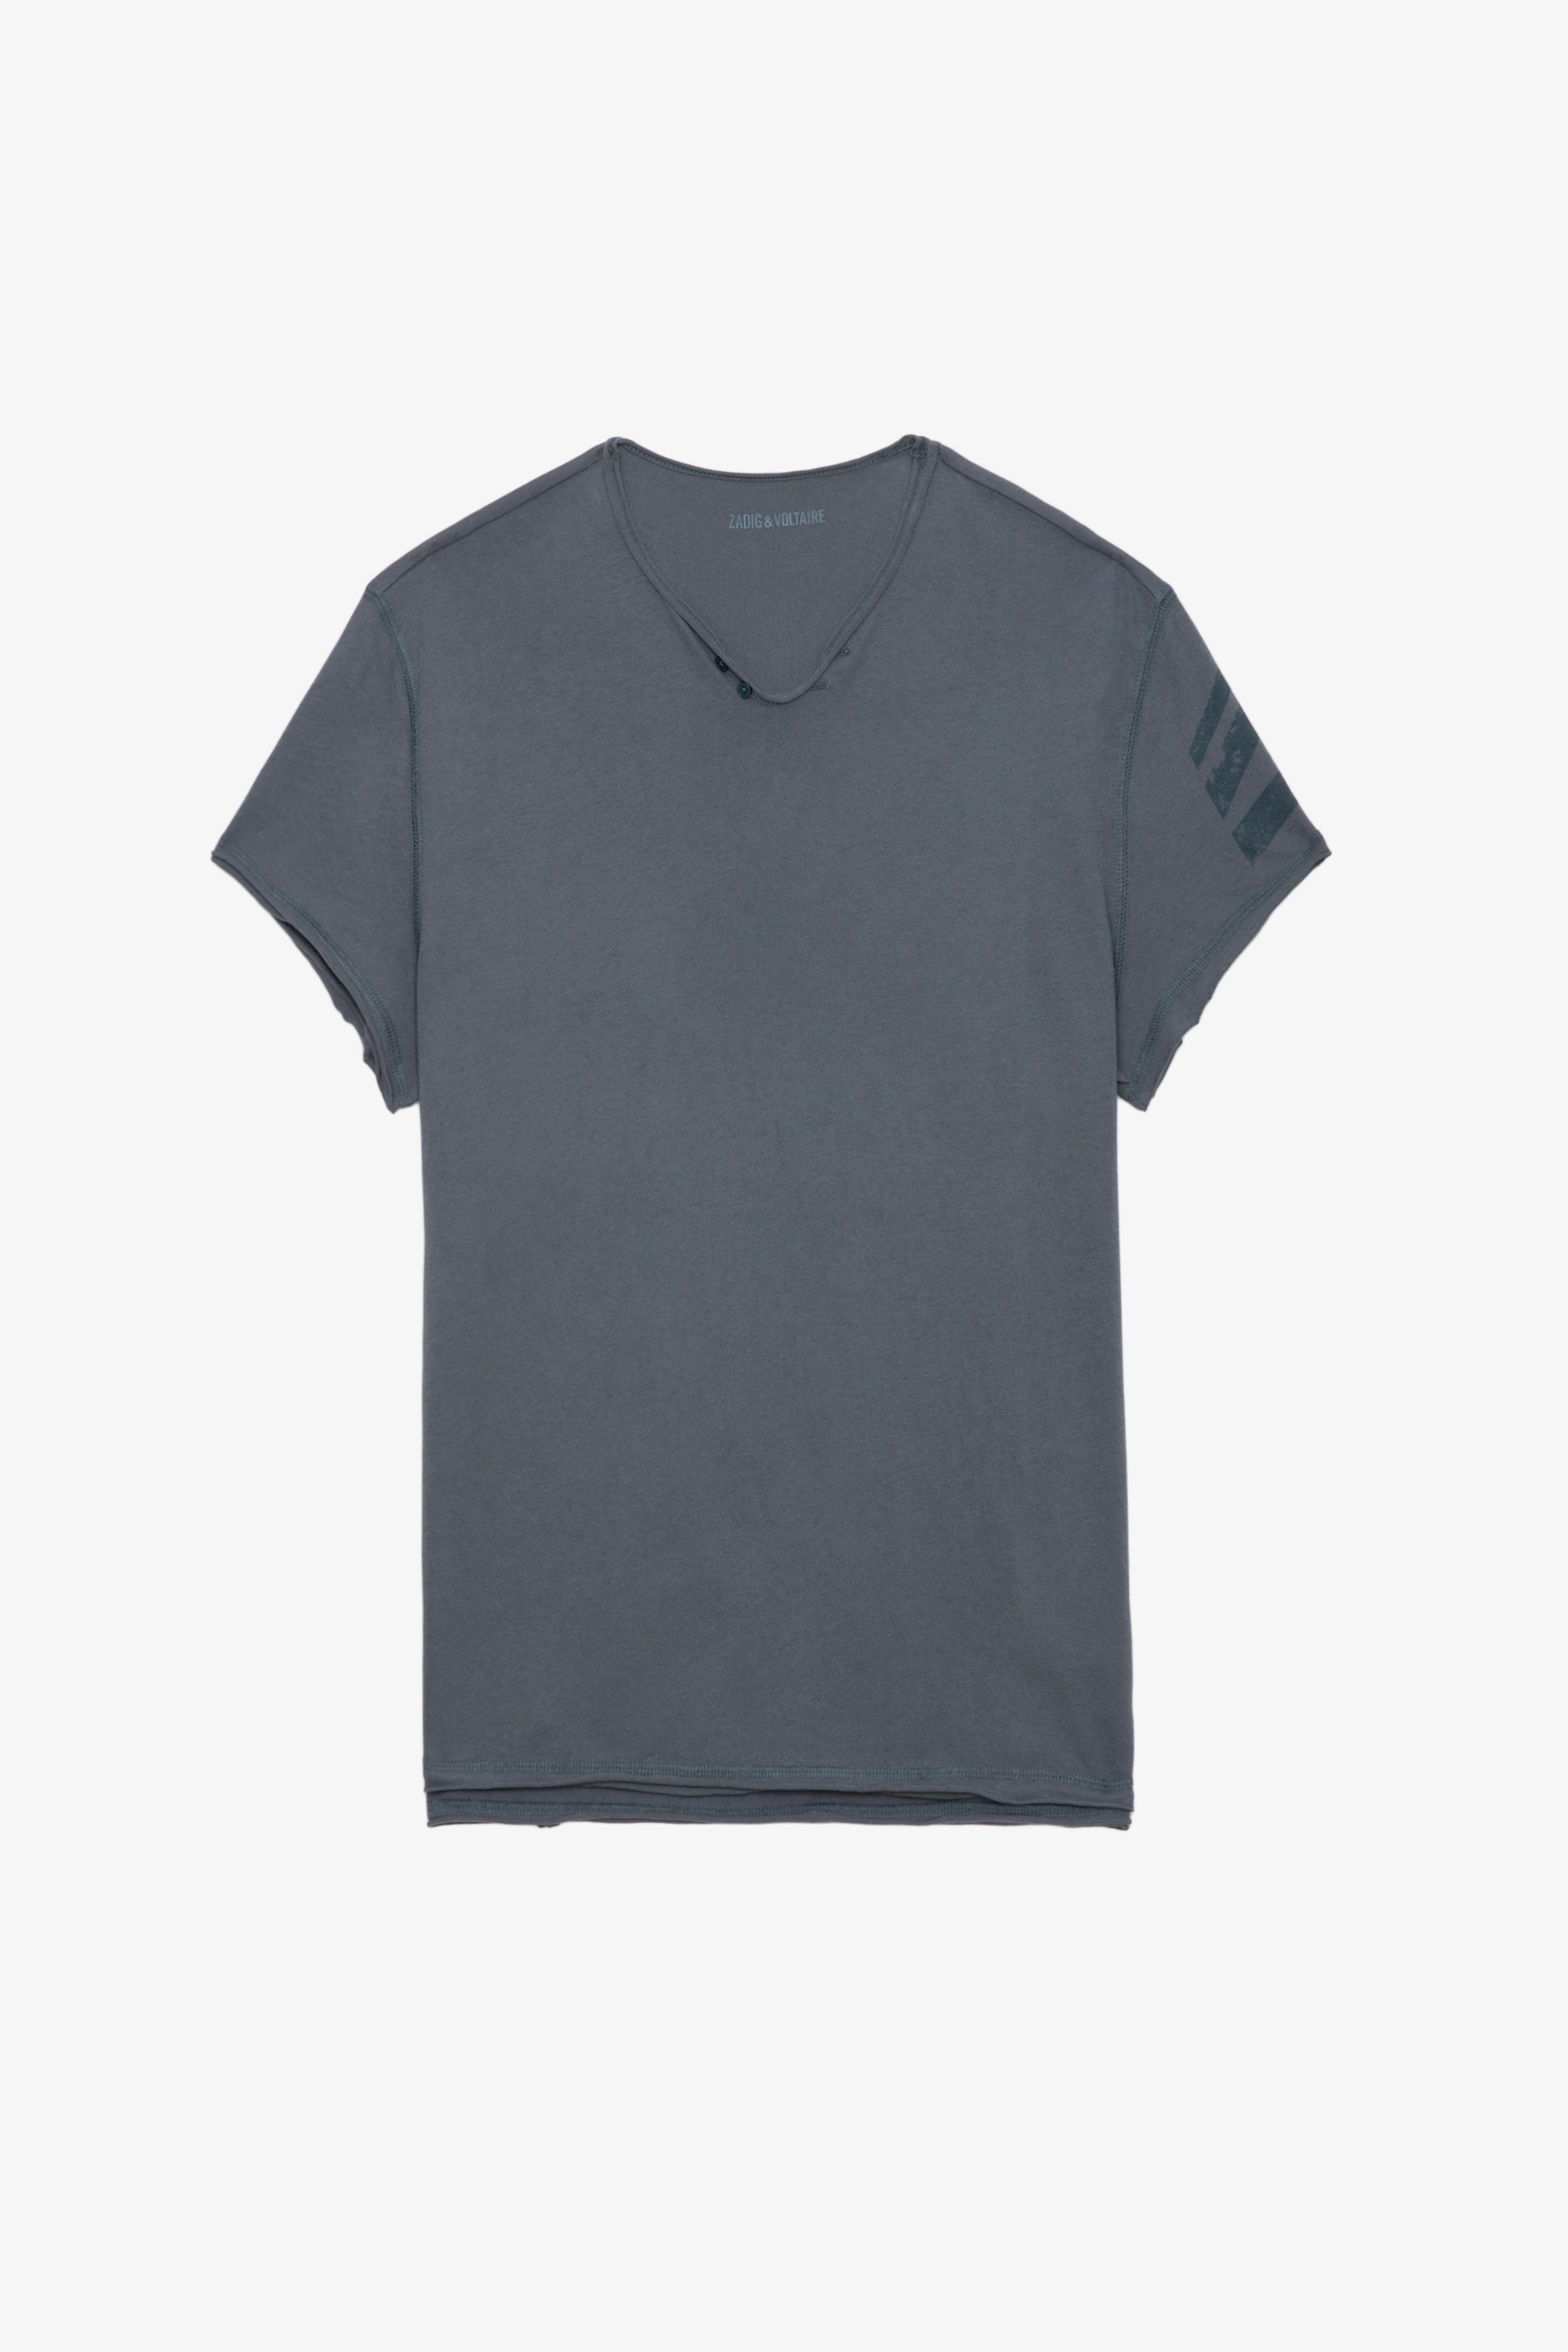 Monasti Arrow Henley T-shirt - Dark grey organic cotton Henley T-shirt with short sleeves and arrows.